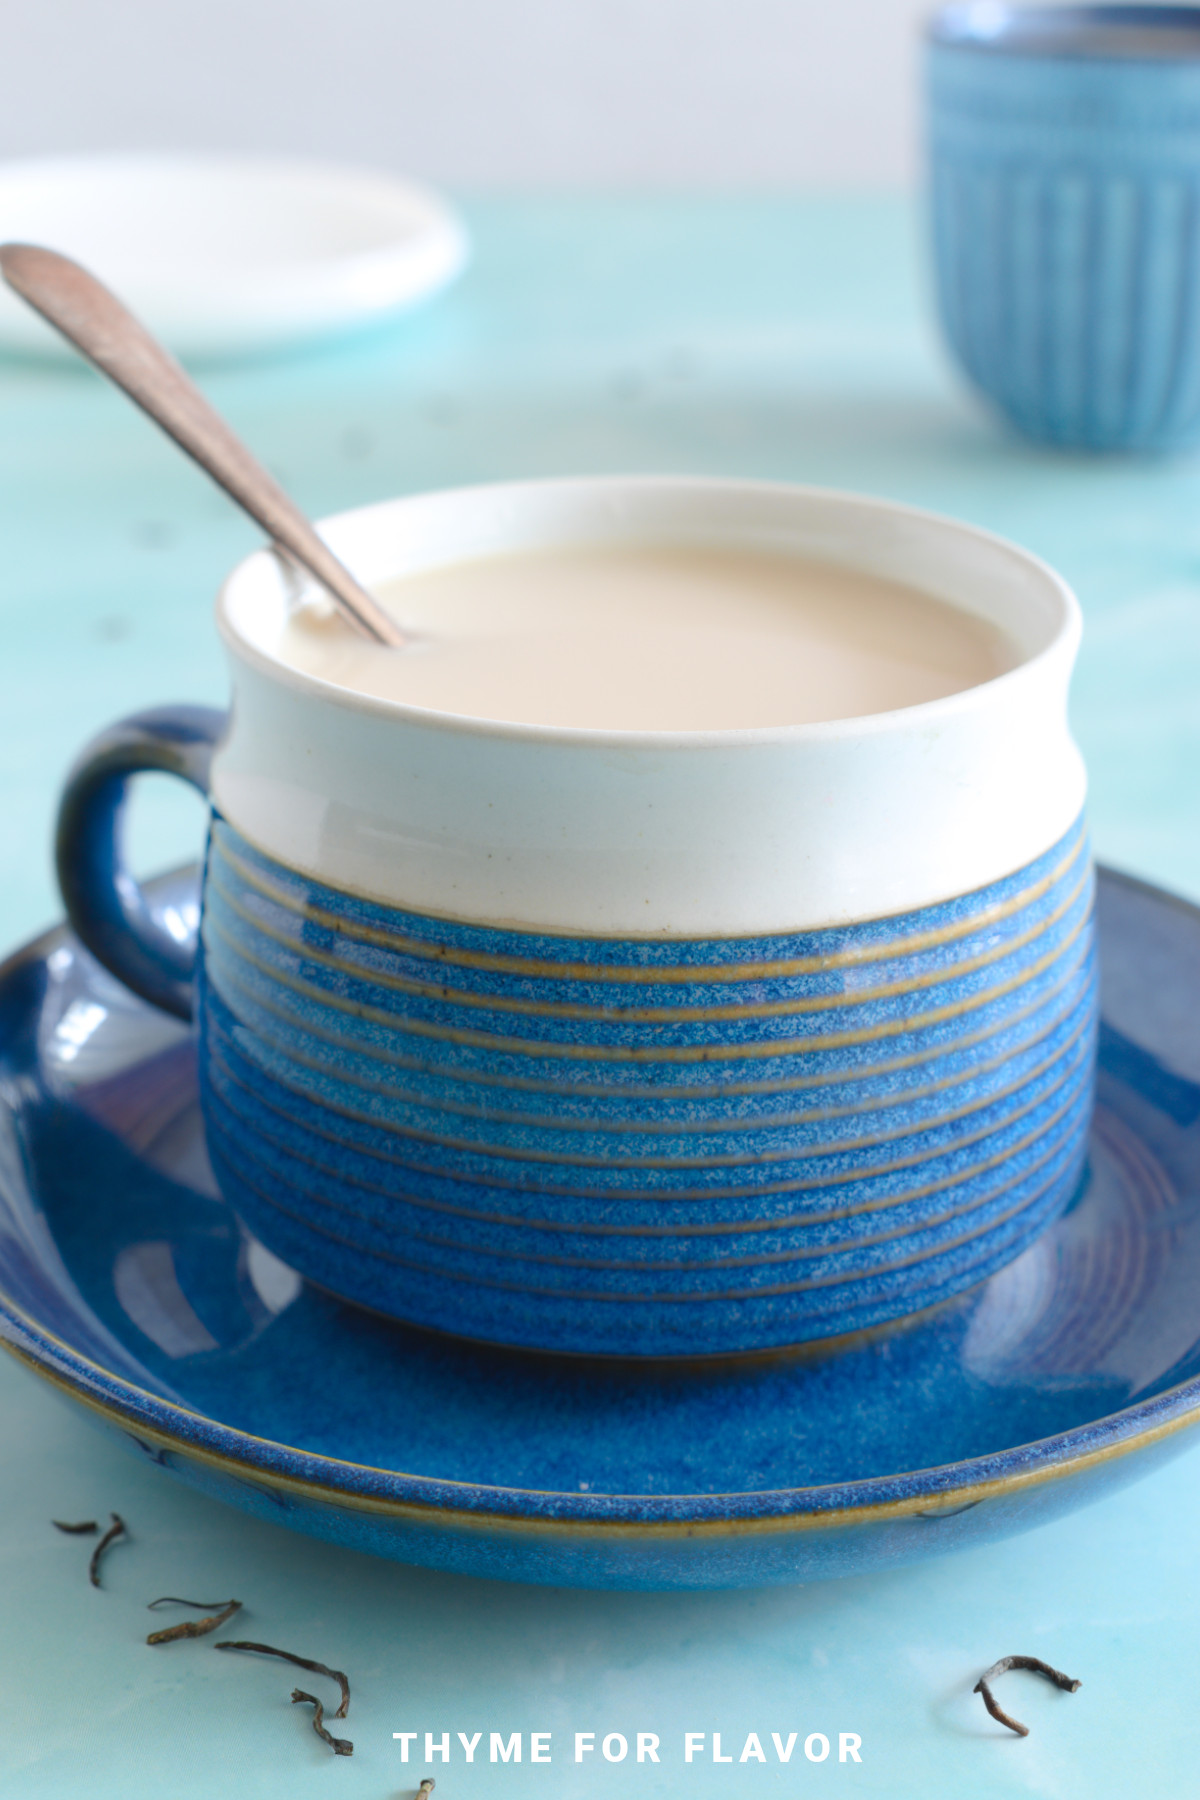 Assam tea with milk in a blue mug on a blue saucer.